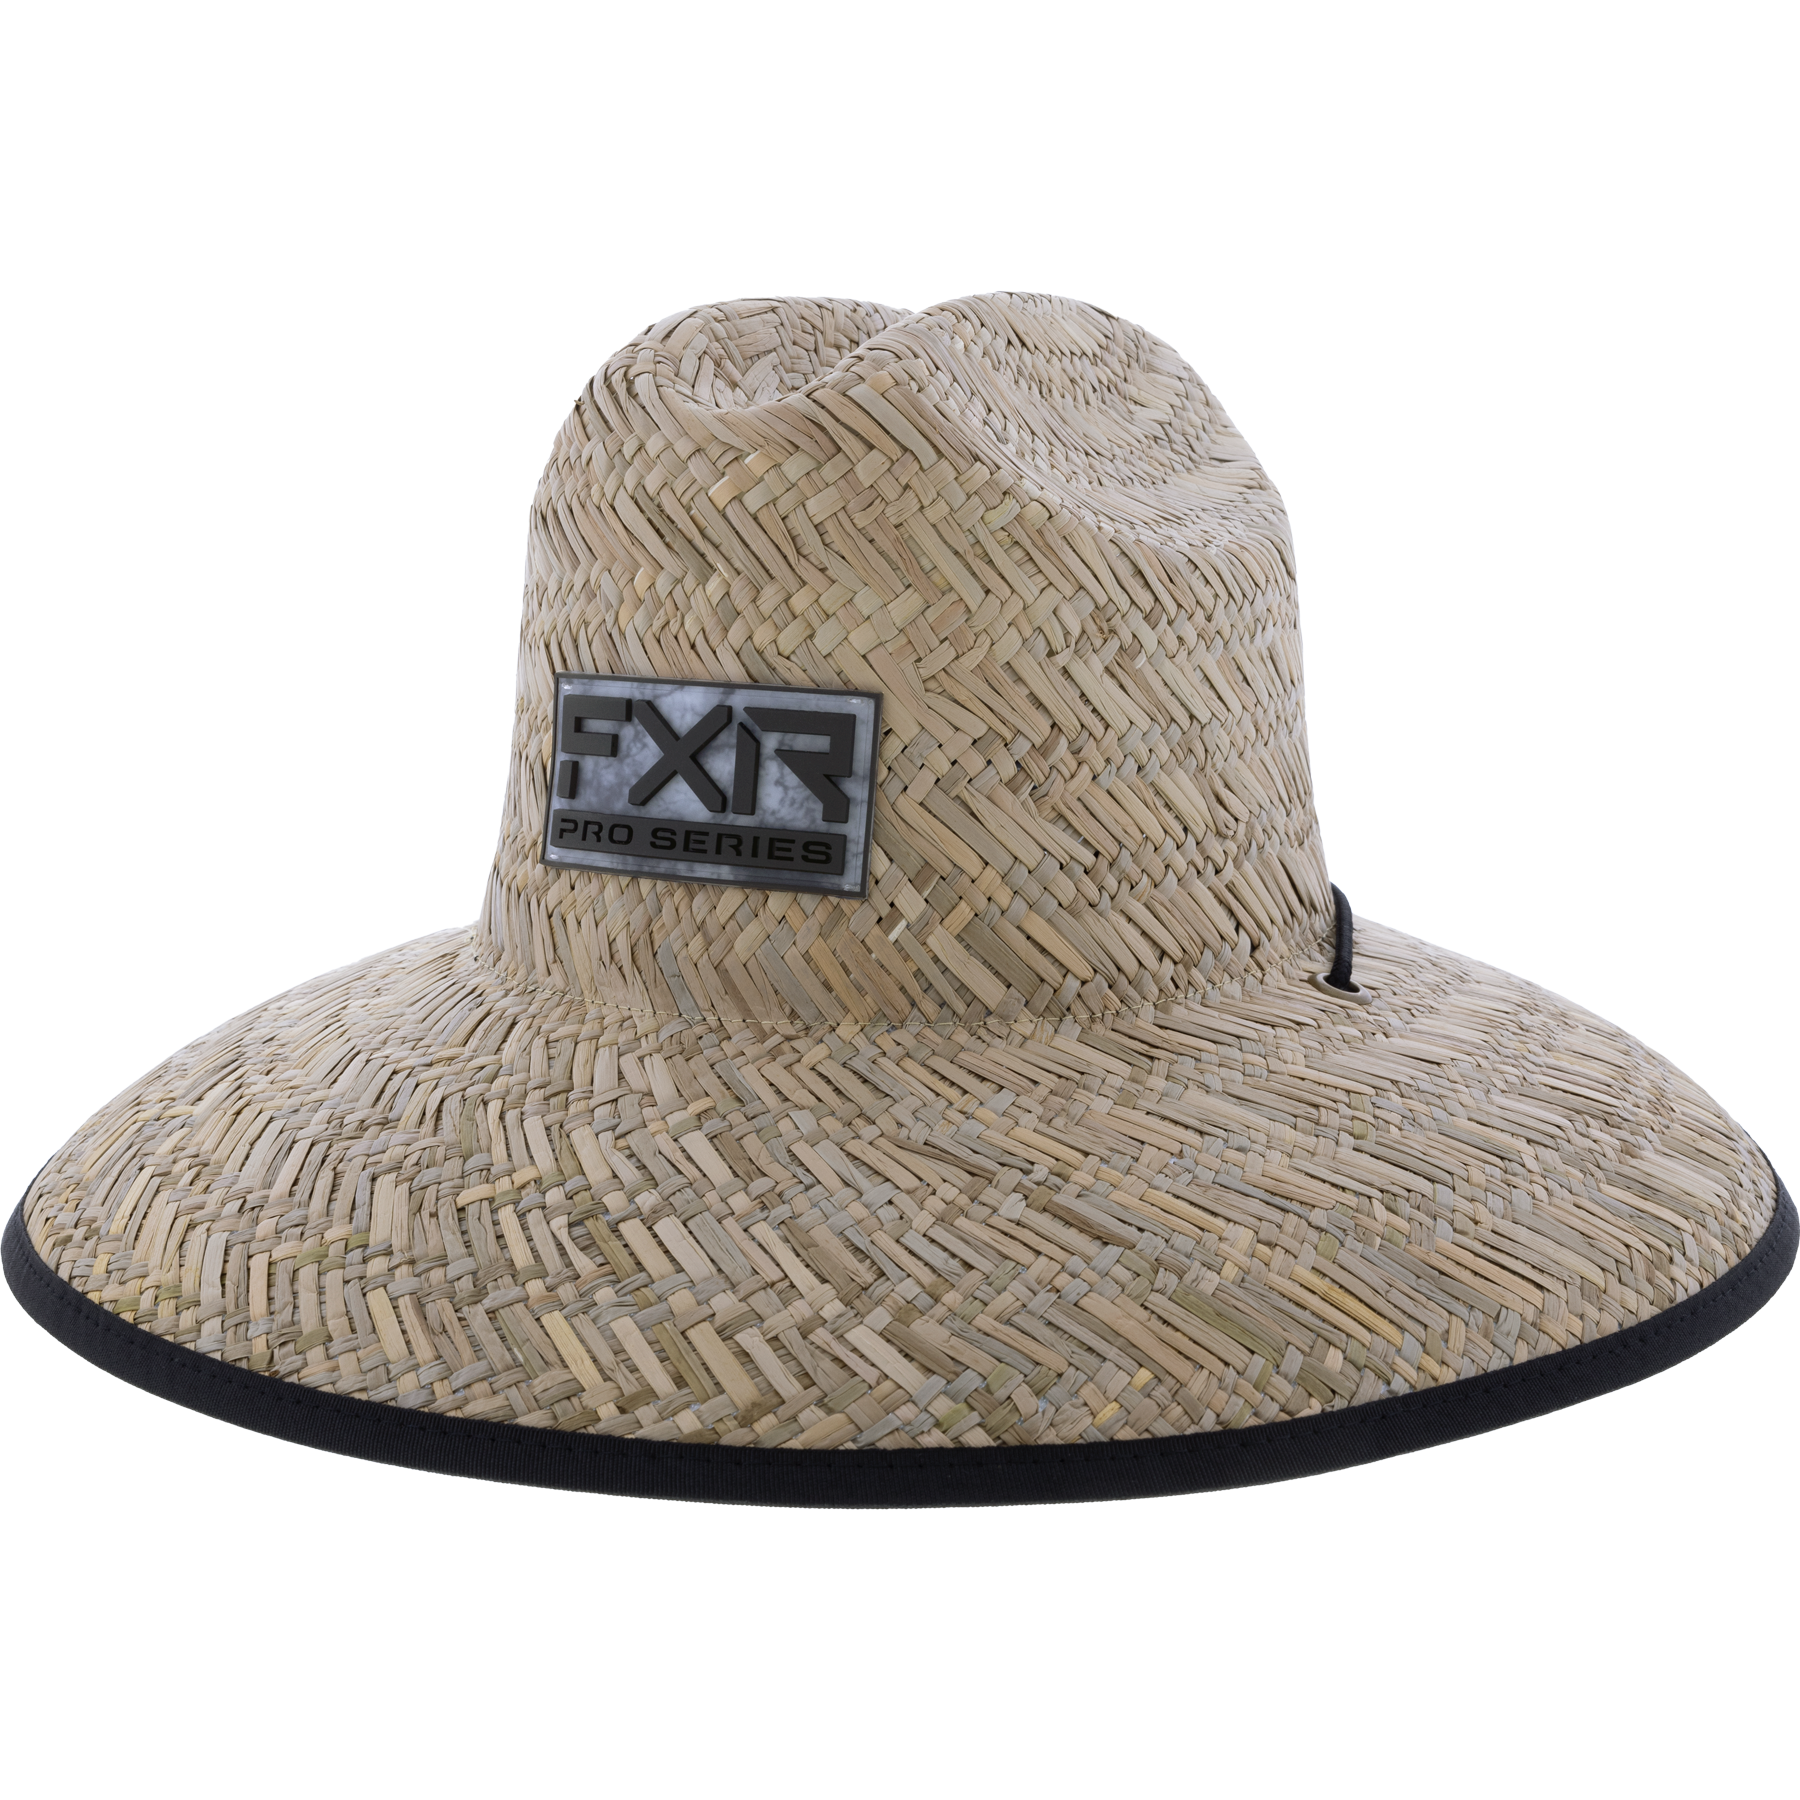 FXR Shoreside Straw Hat Grey Ripple